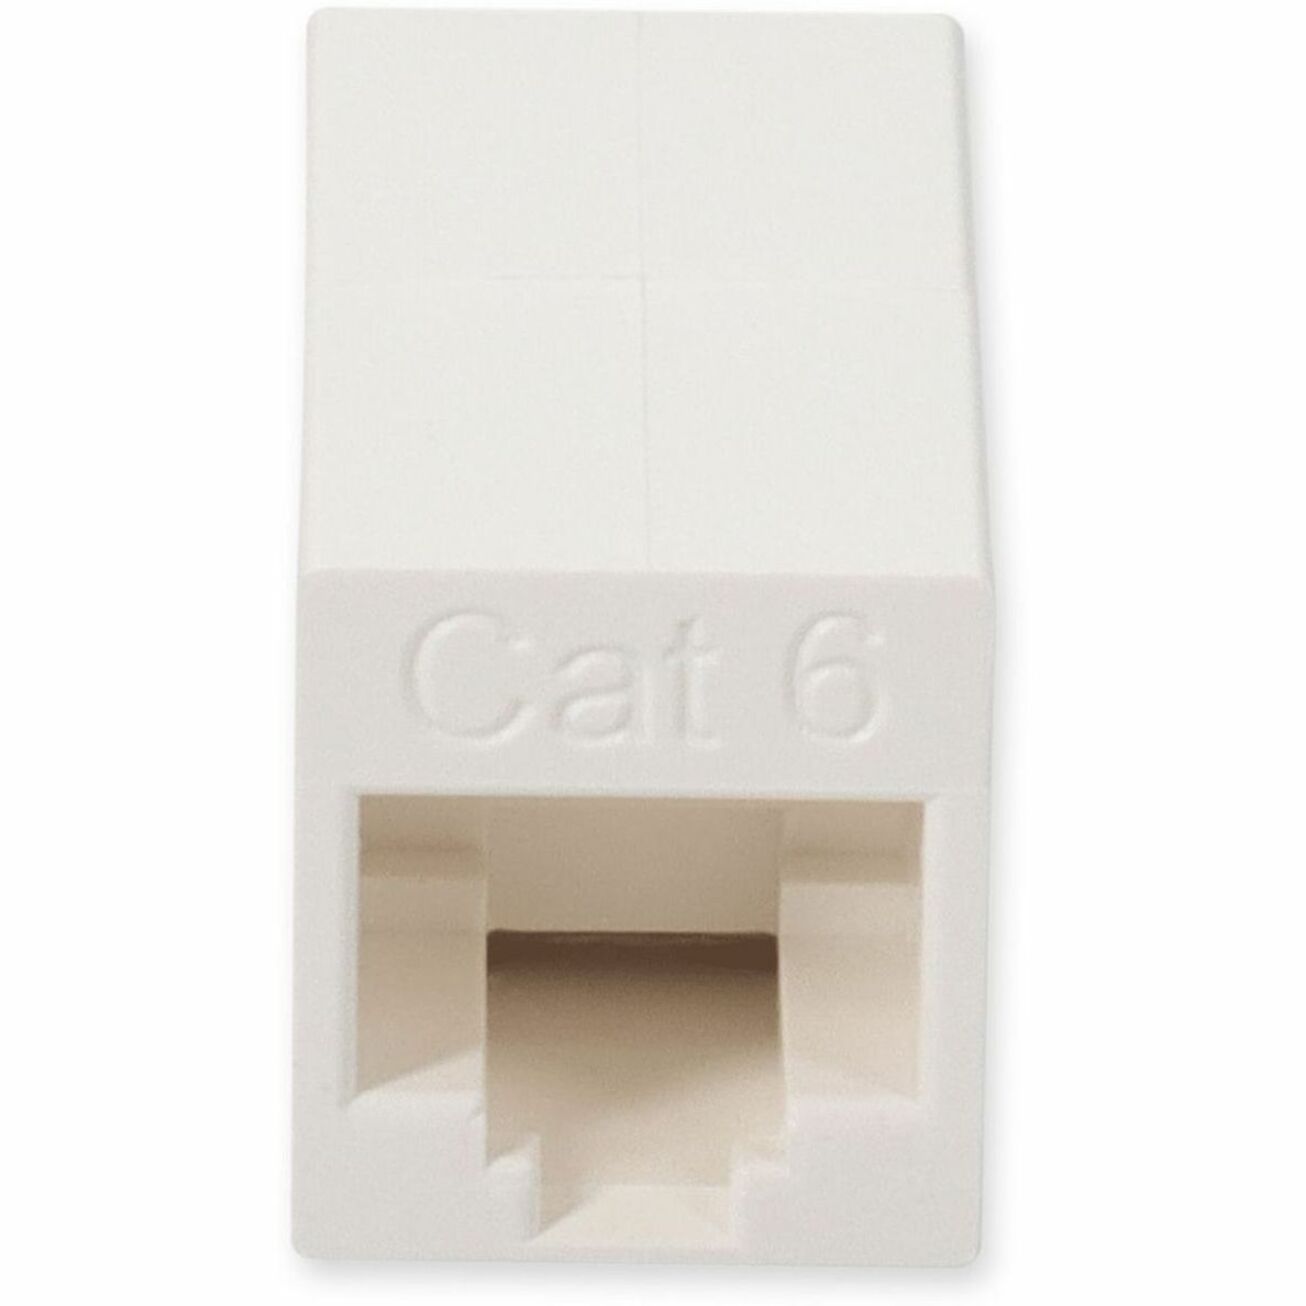 AddOn ADD-CAT6CPLR Cat6 RJ-45 (Female) to RJ-45 (Female) Inline Coupler, Network Adapter